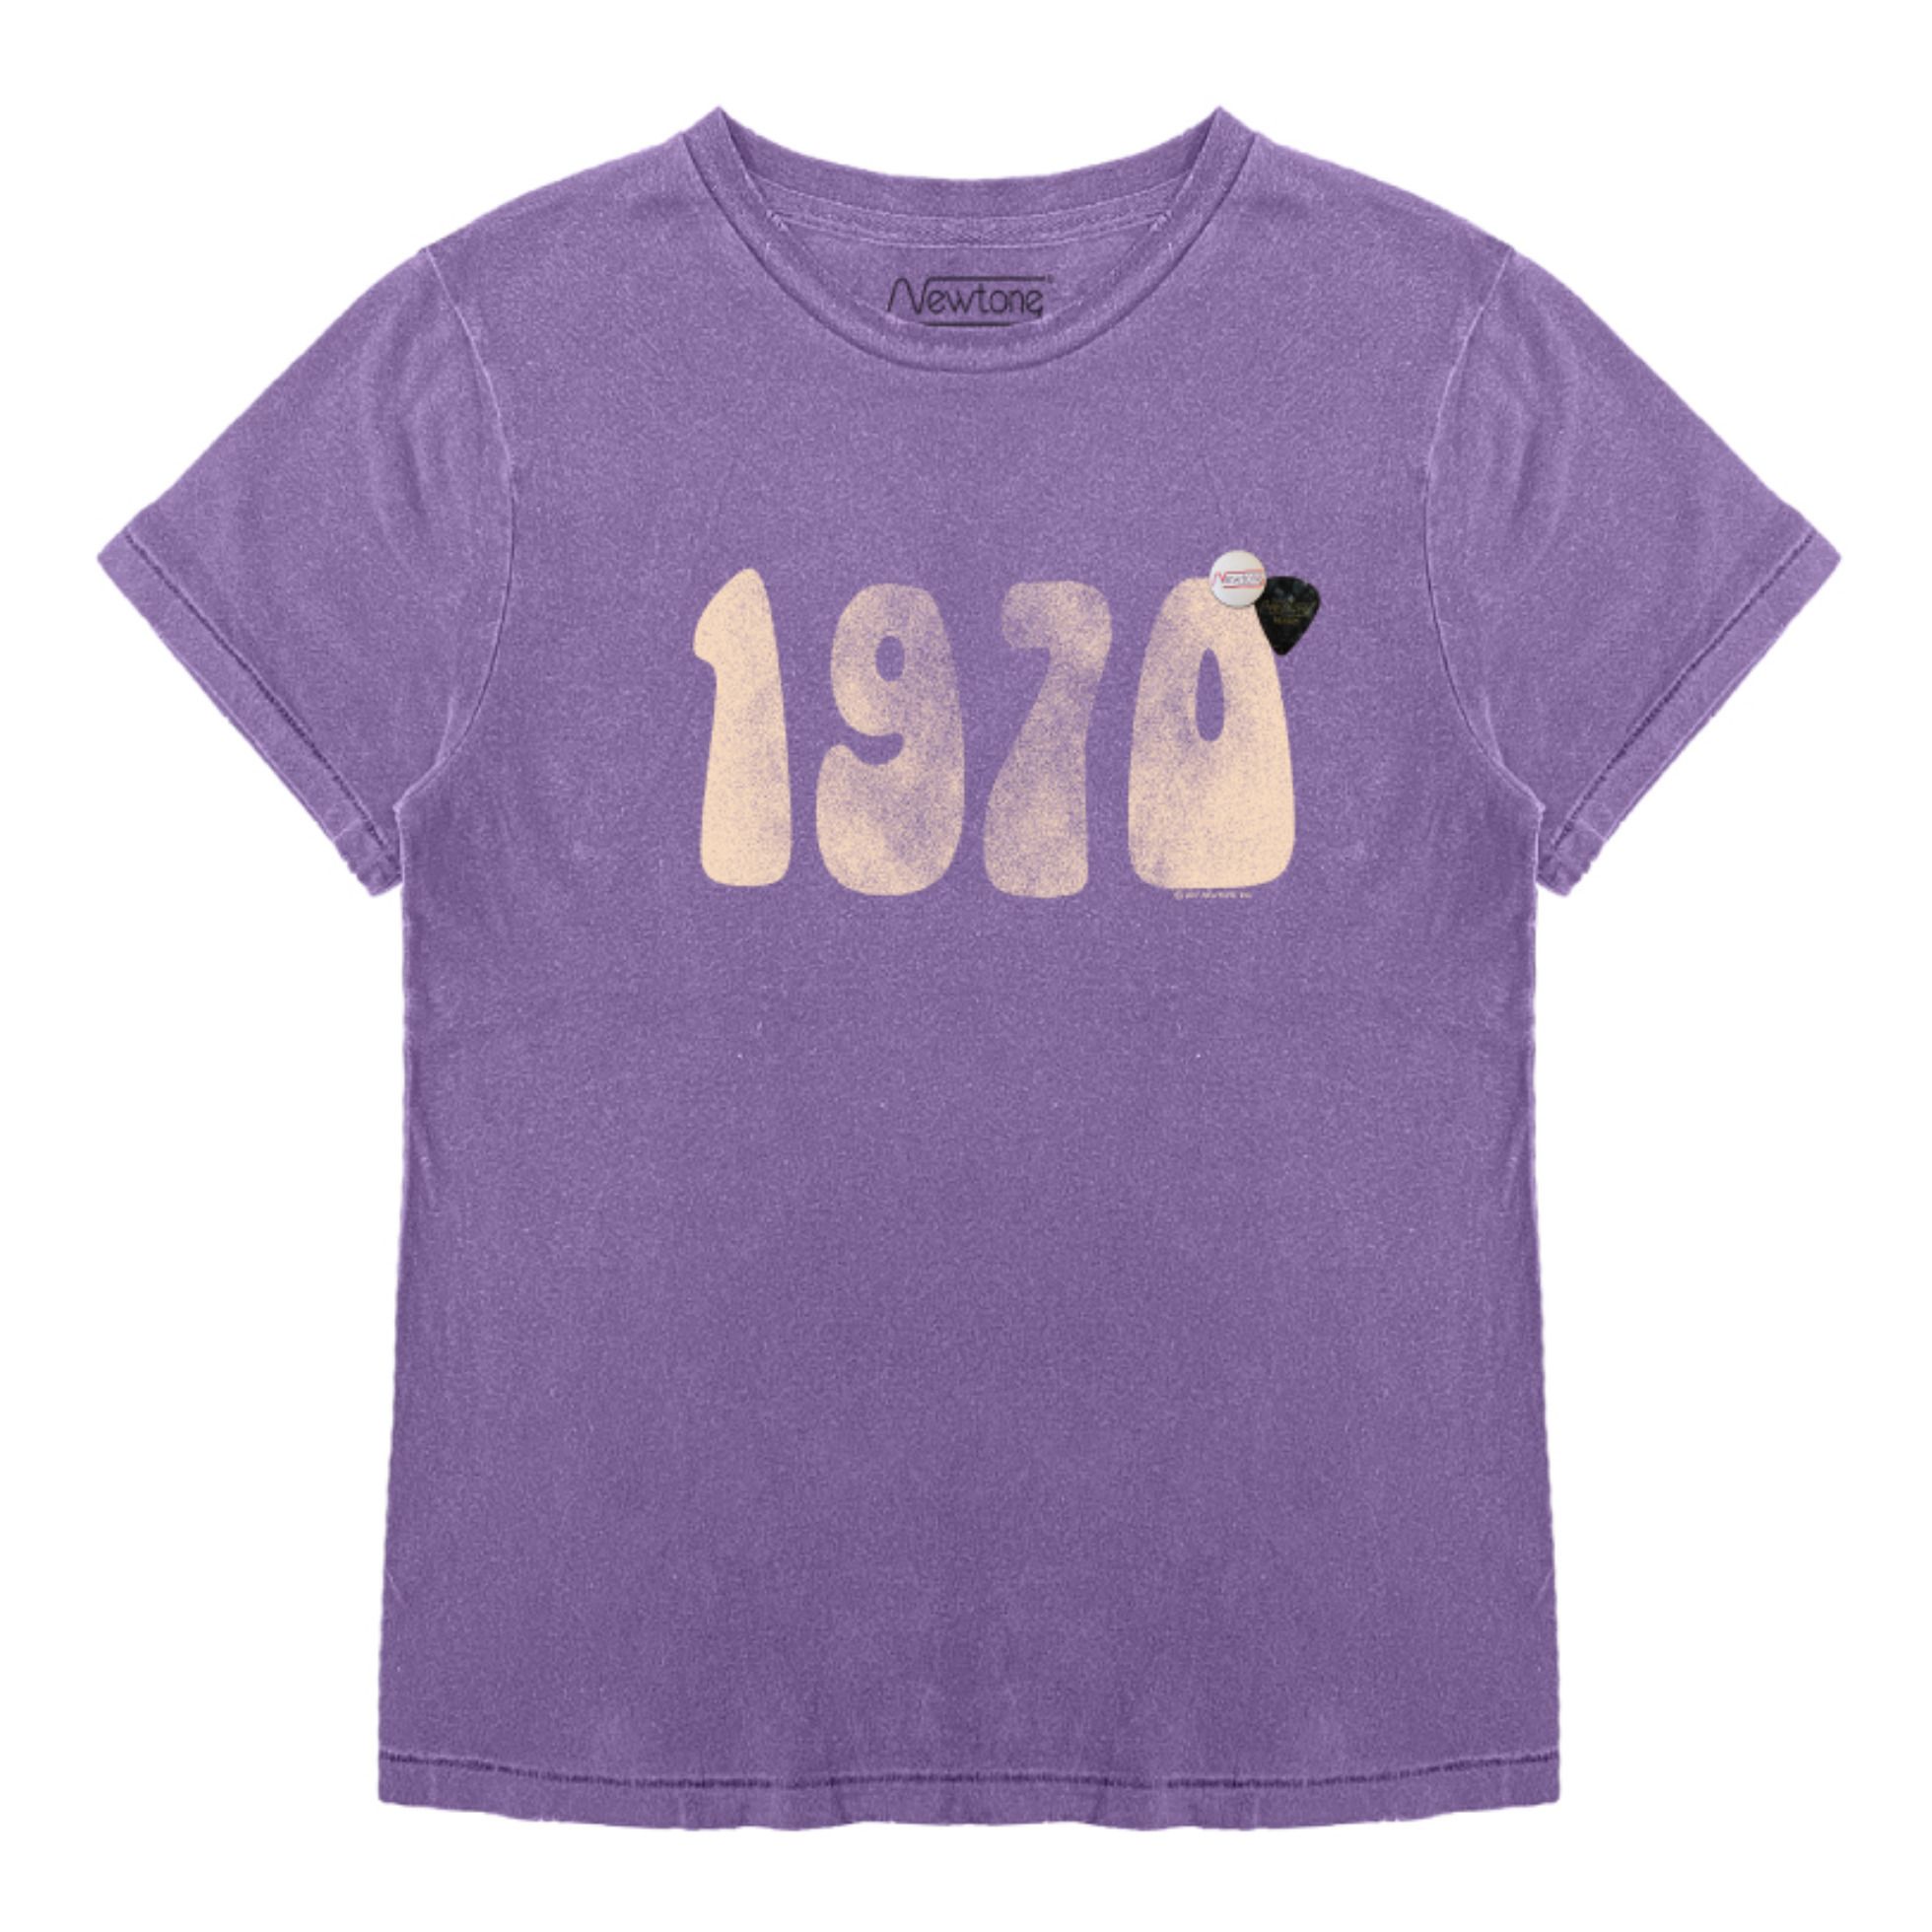 Newtone - T-Shirt Starlight 1970 - Femme - Violet